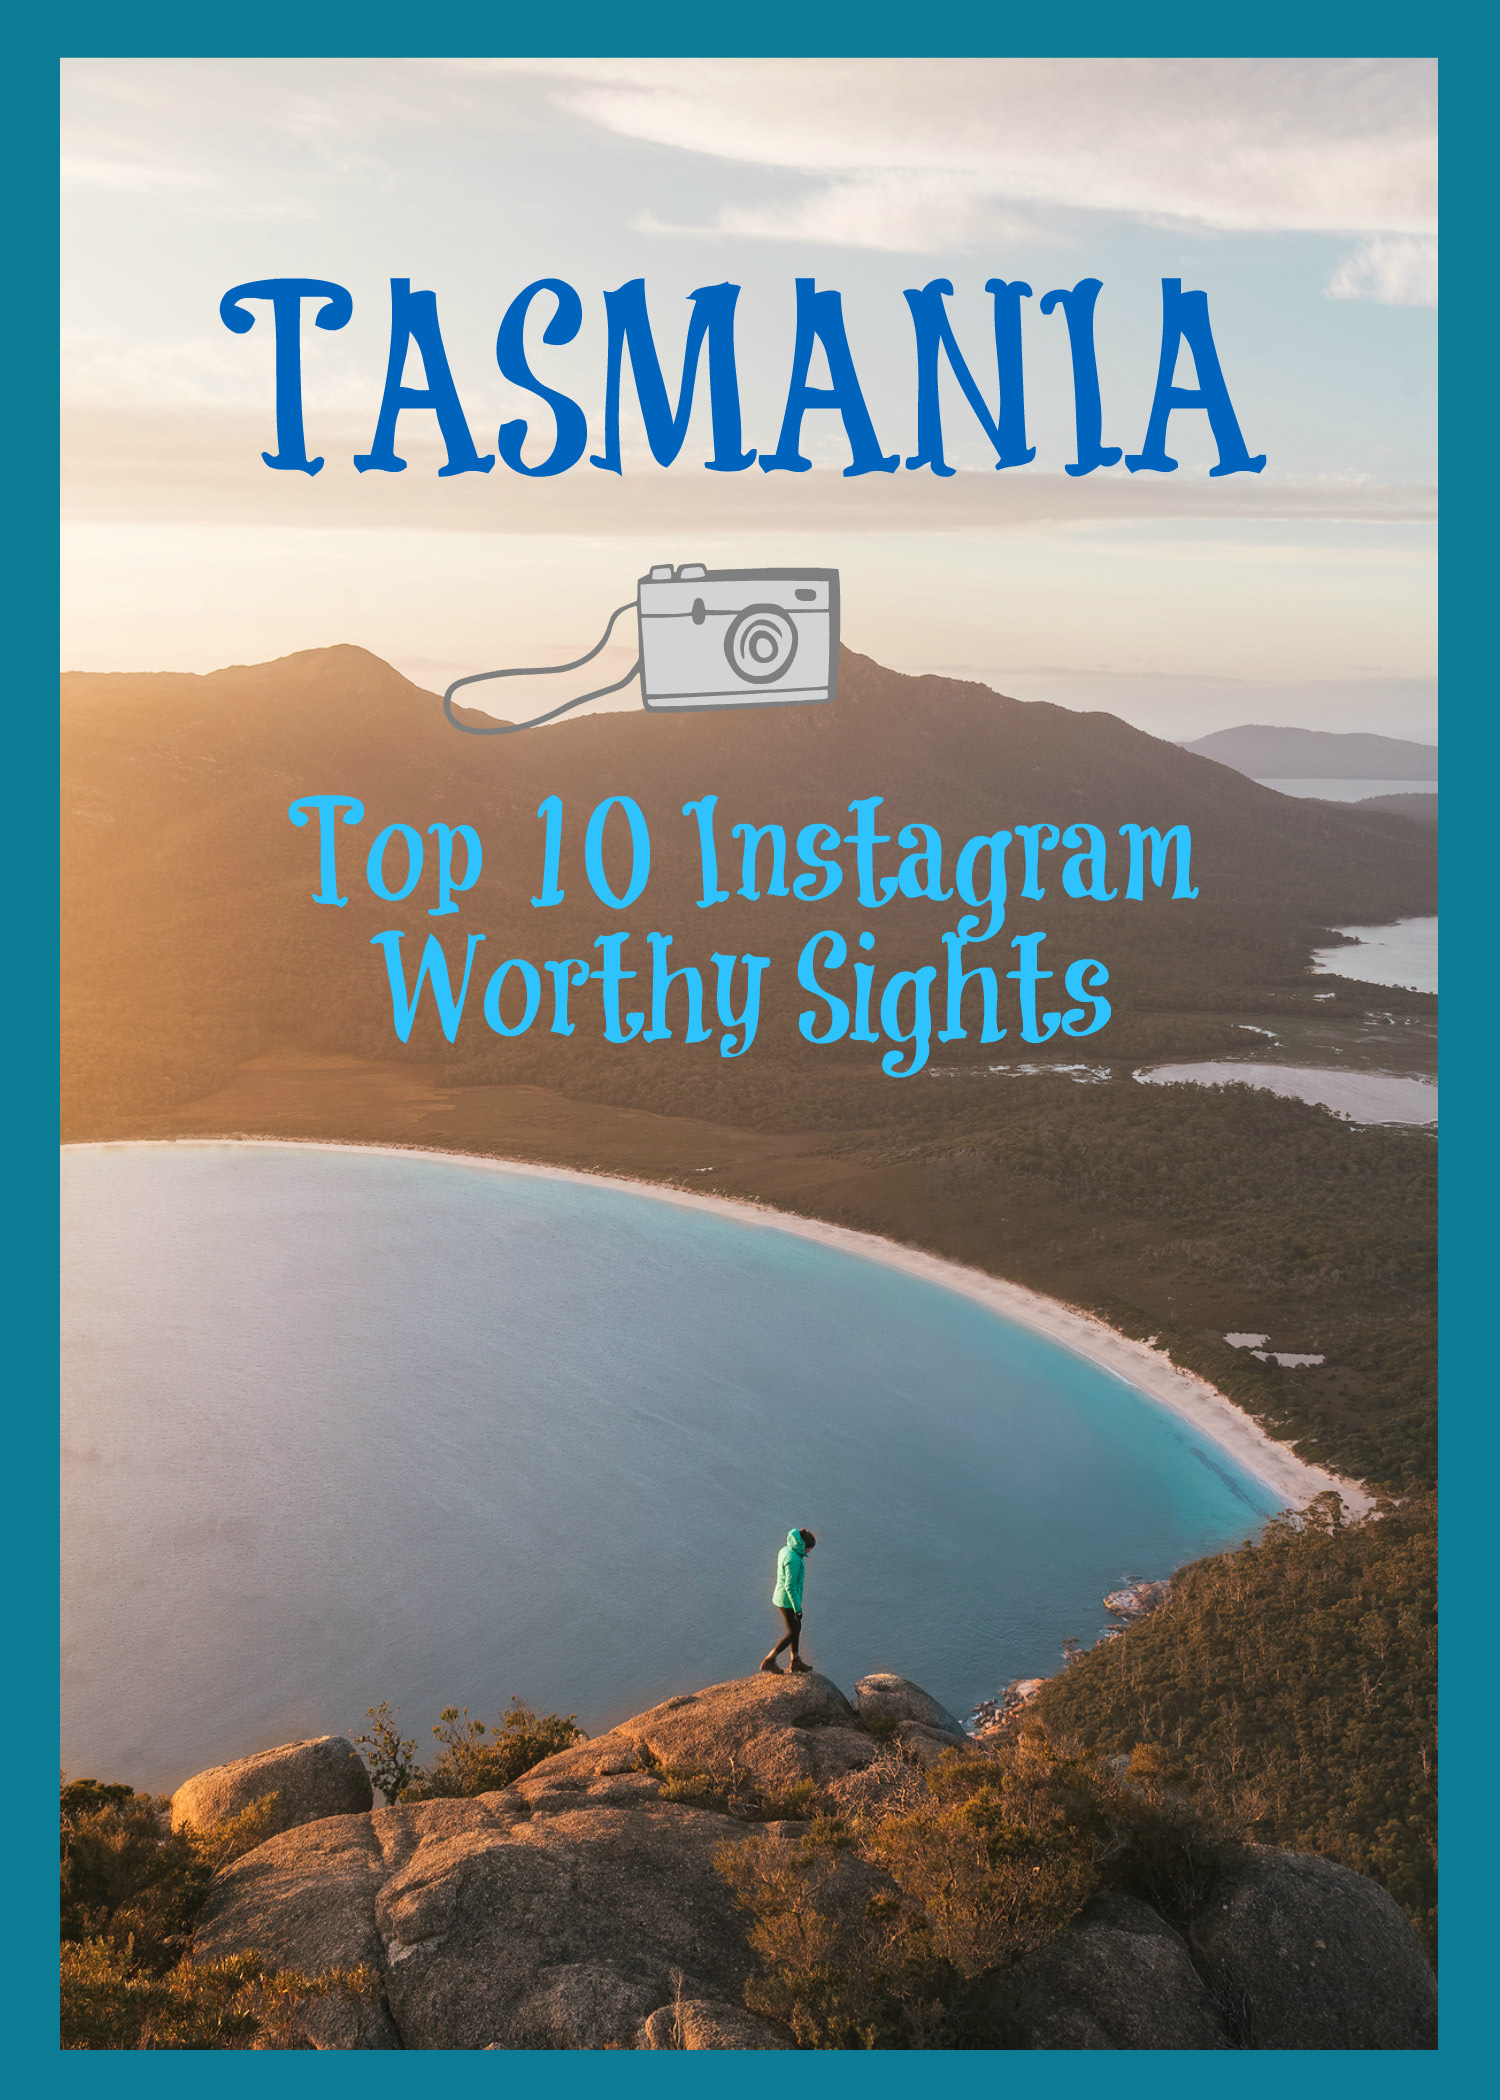 Tasmania Top 10 Instagram Worthy Sights PIN